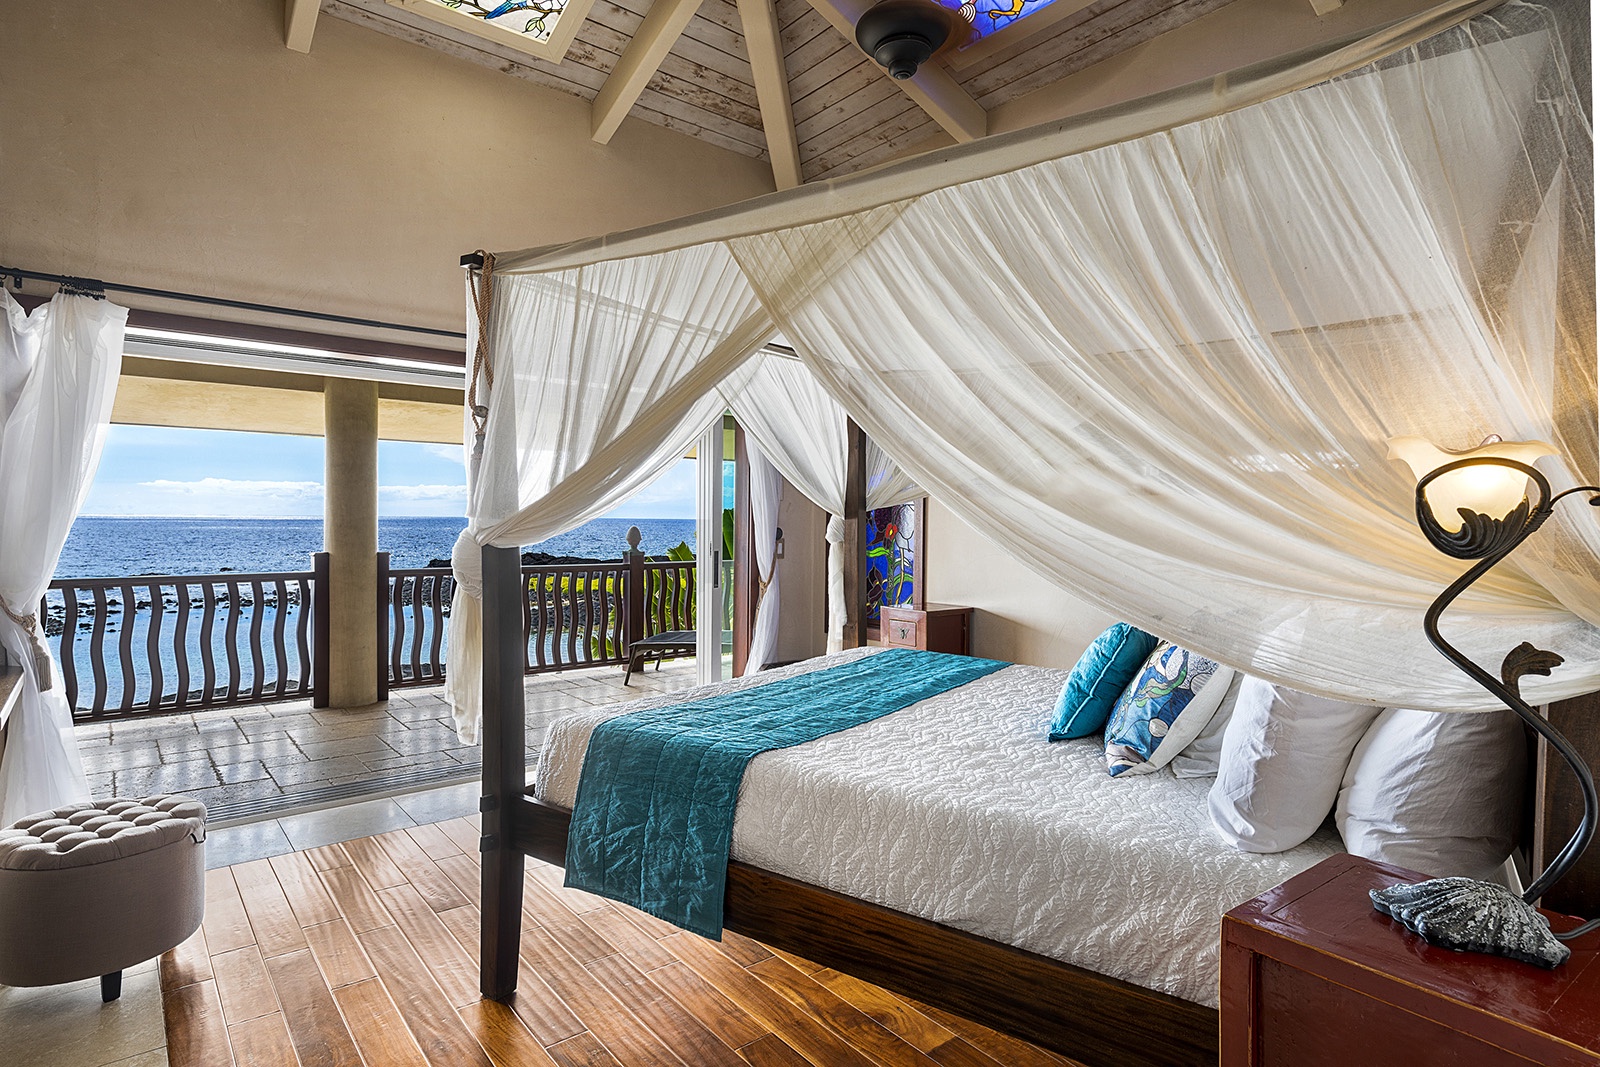 Kailua Kona Vacation Rentals, Mermaid Cove - Primary bedroom on the top floor